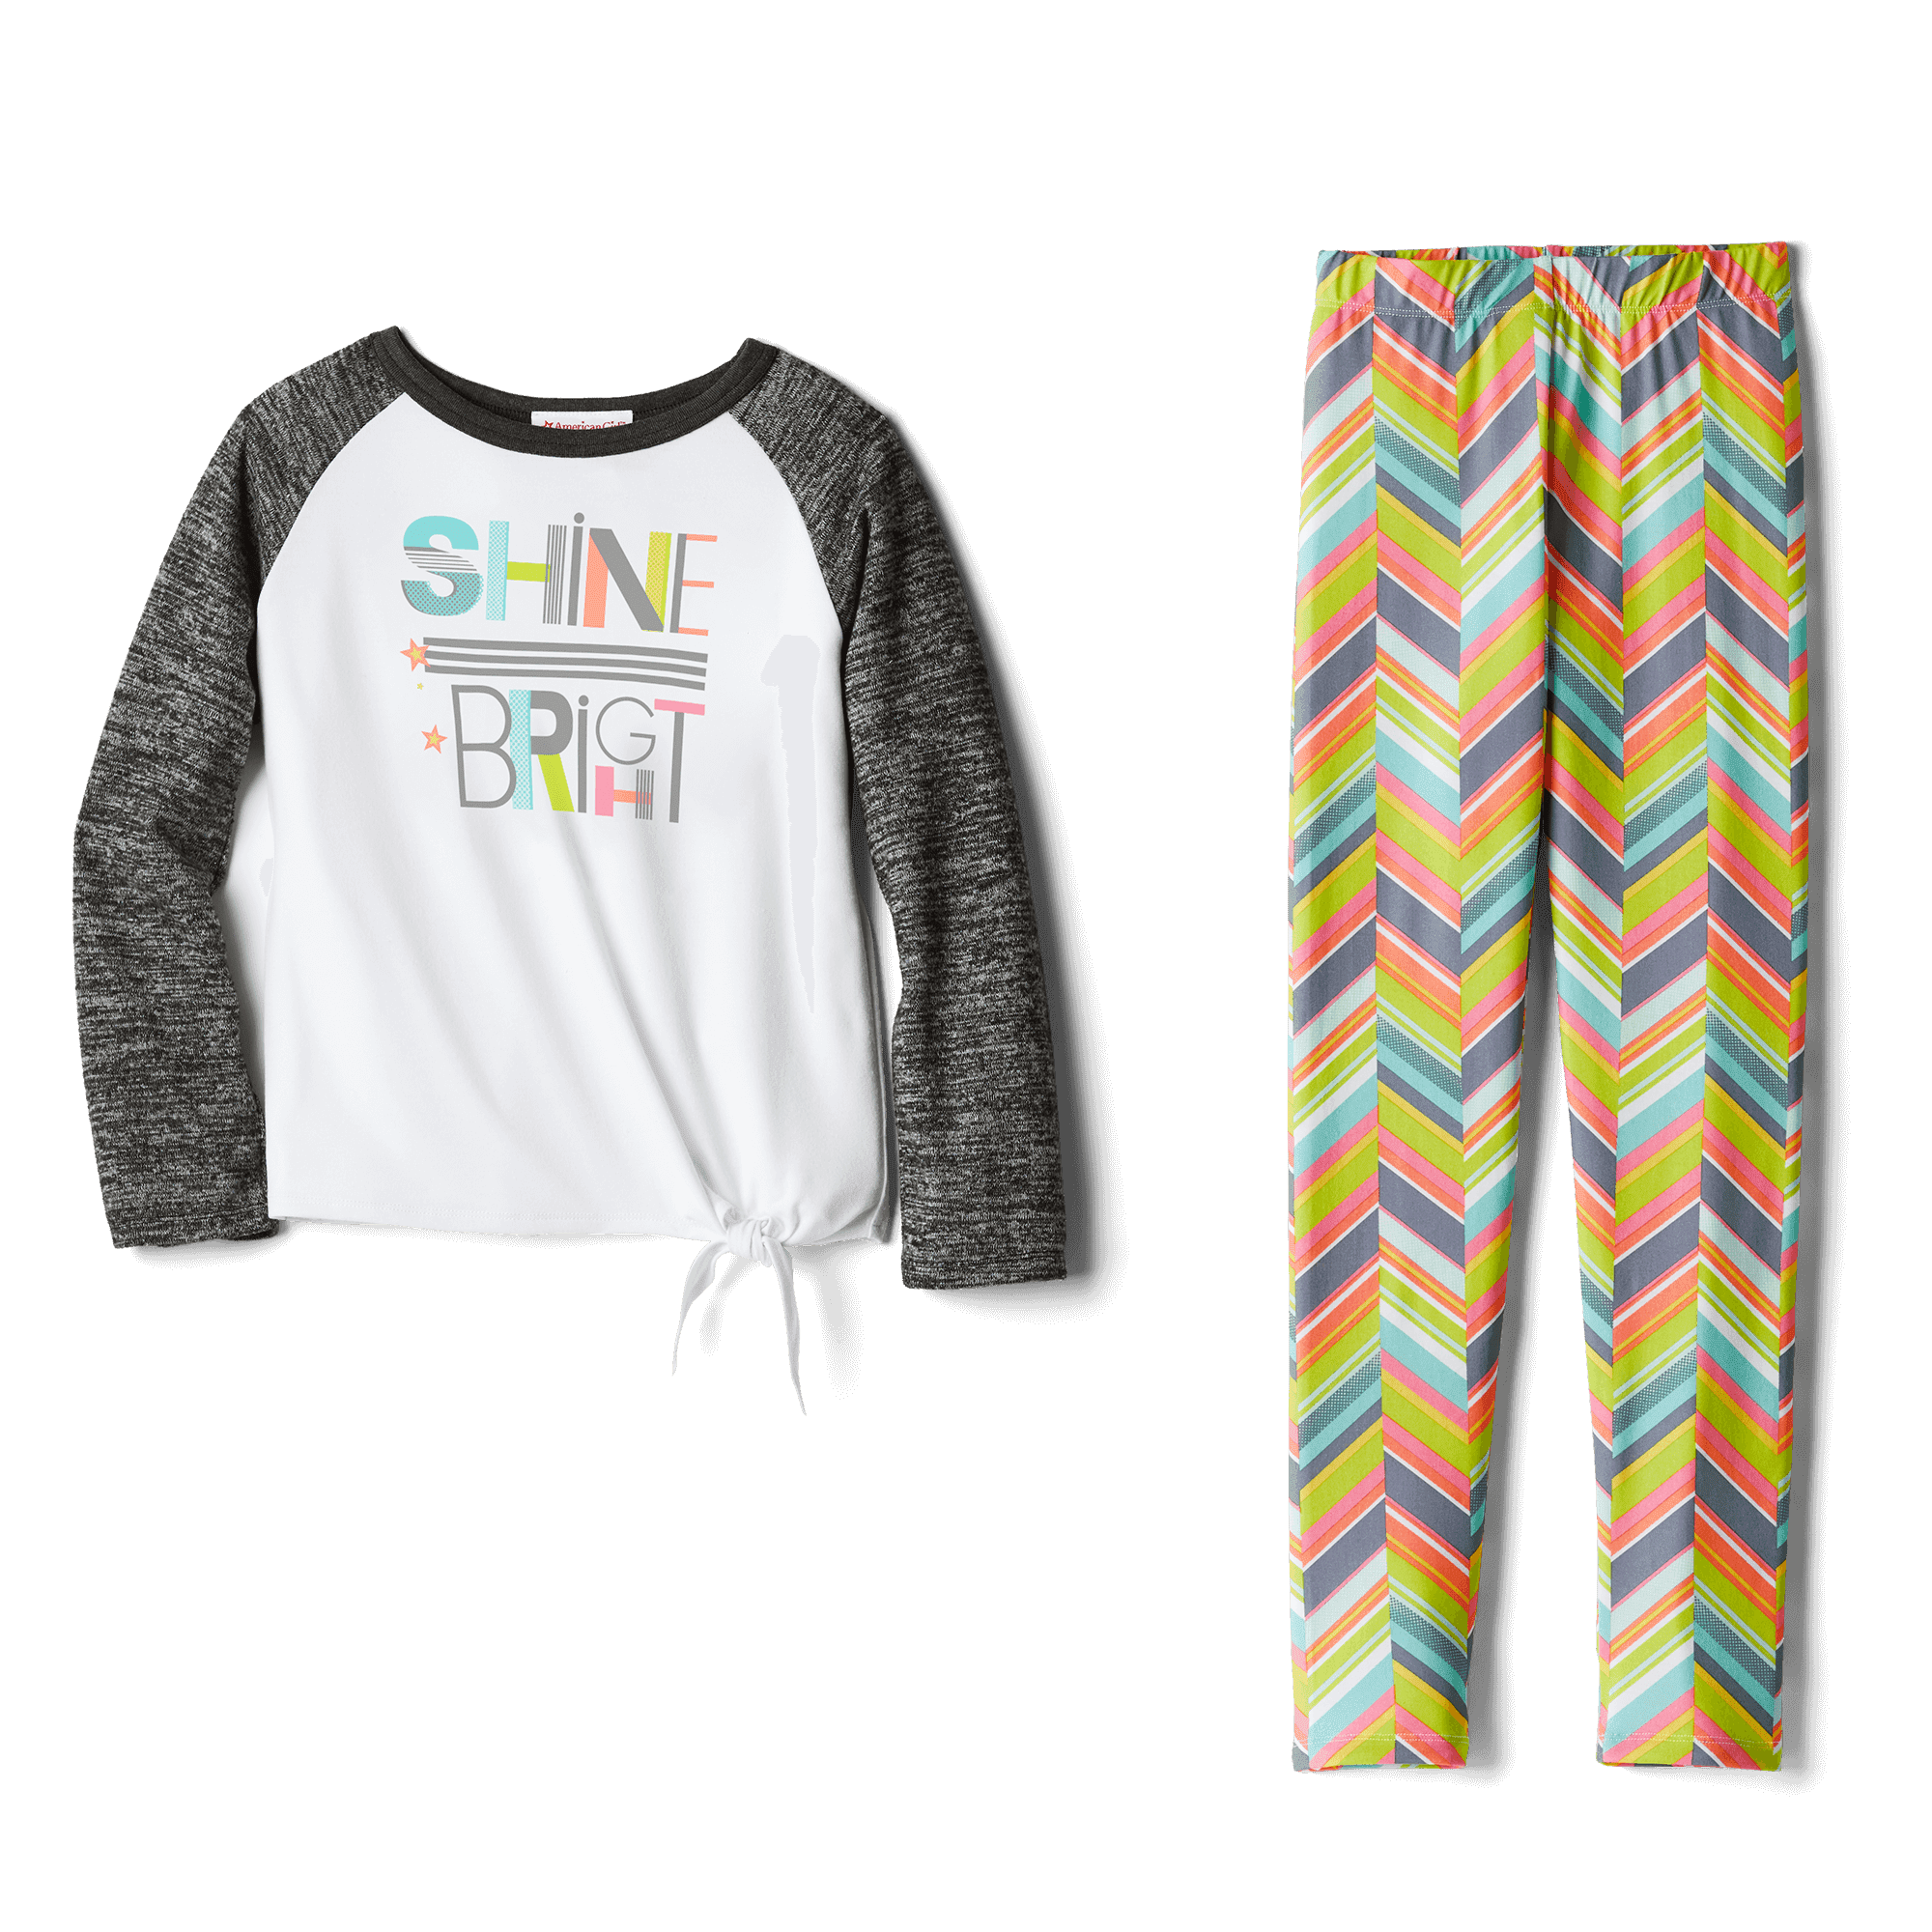 Shine Bright Pajamas for Girls